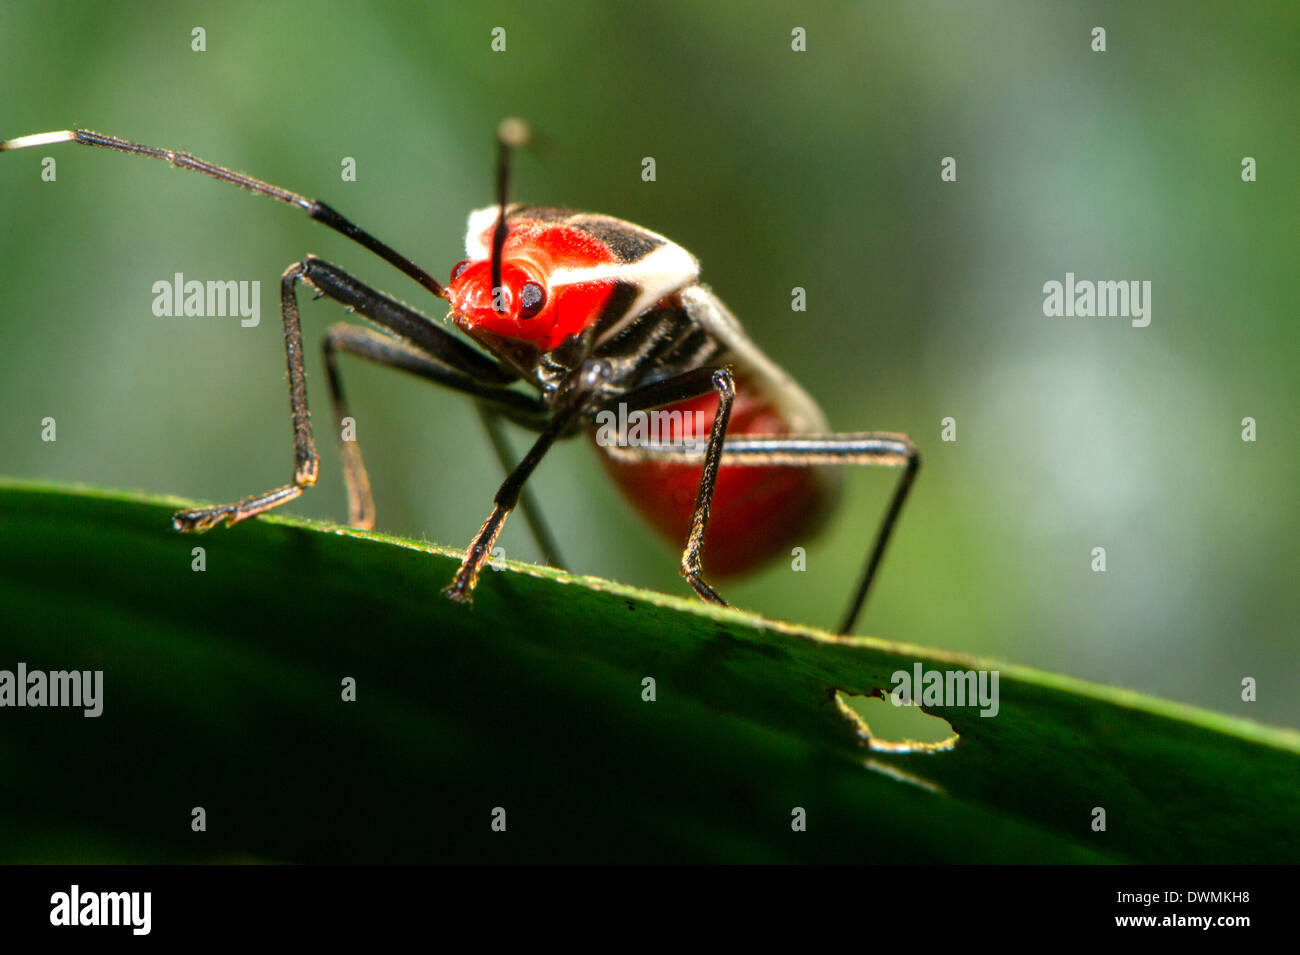 Hemipteran, known as the True bugs, family Lygaeidae, Maliau Basin, Sabah, Borneo, Malaysia, Southeast Asia Stock Photo